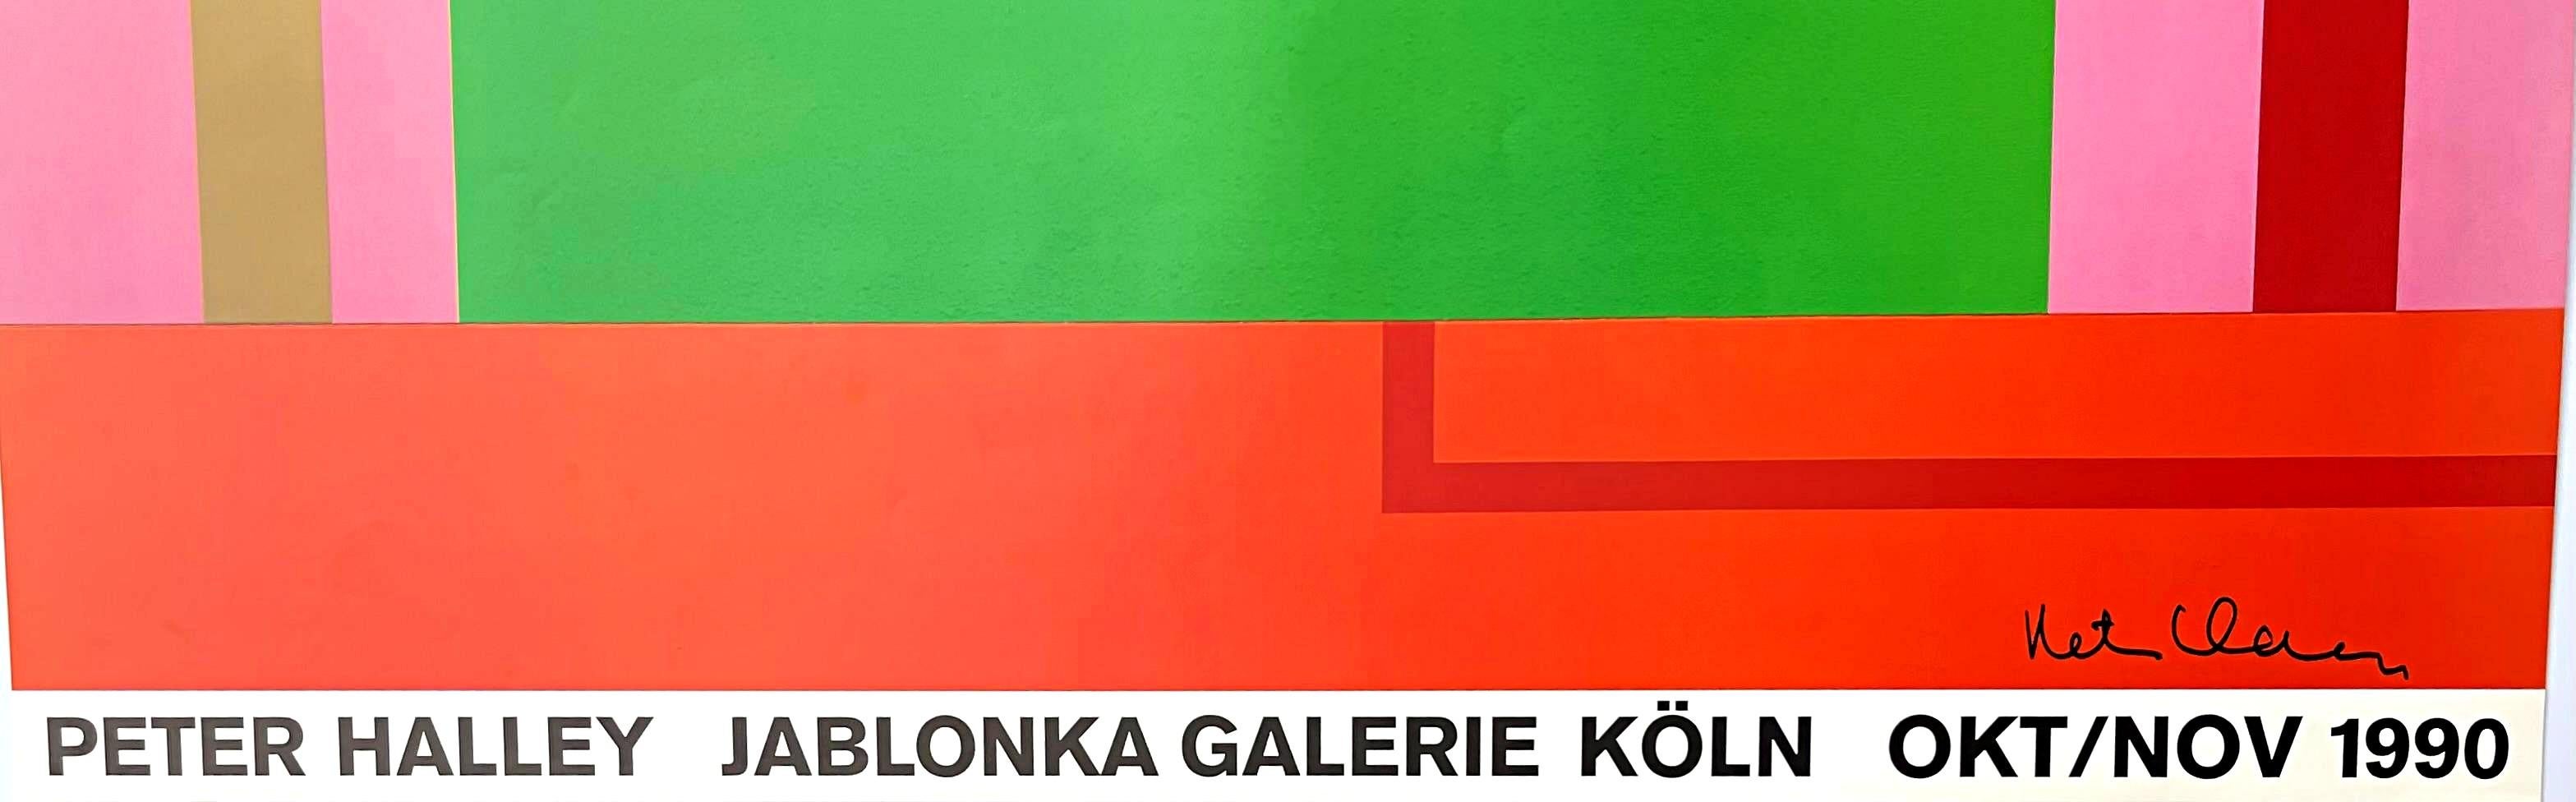 Peter Halley, Jablonka Galerie, Köln rare exhibition poster (Hand Signed) For Sale 2